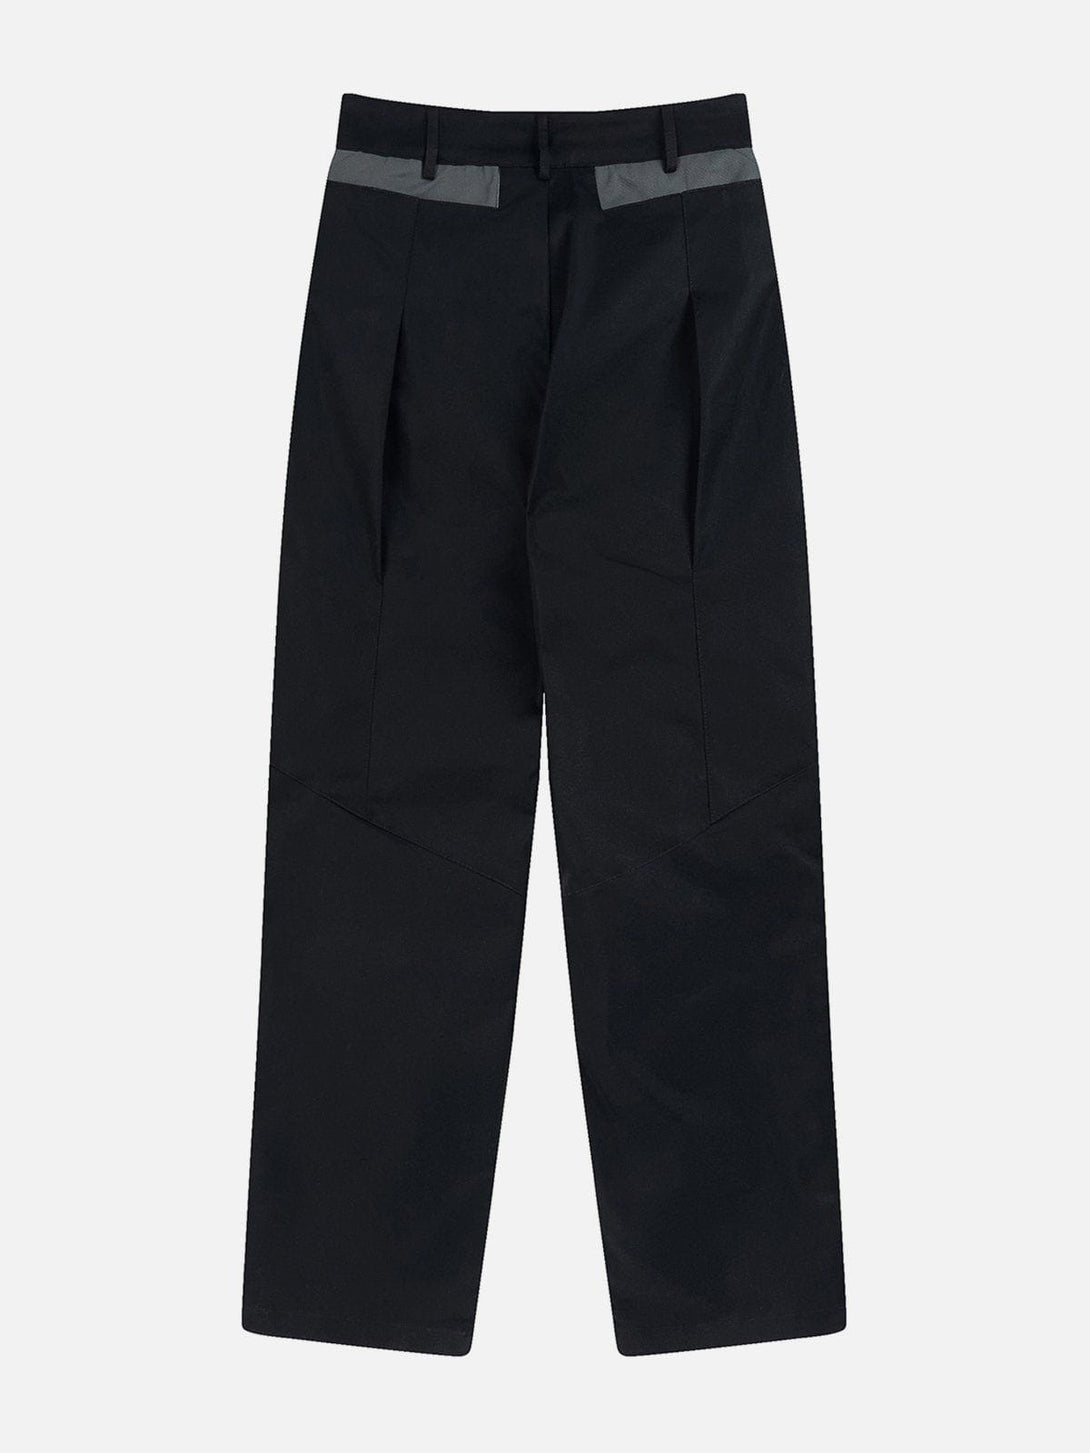 Levefly - Vintage Patchwork Pants - Streetwear Fashion - levefly.com